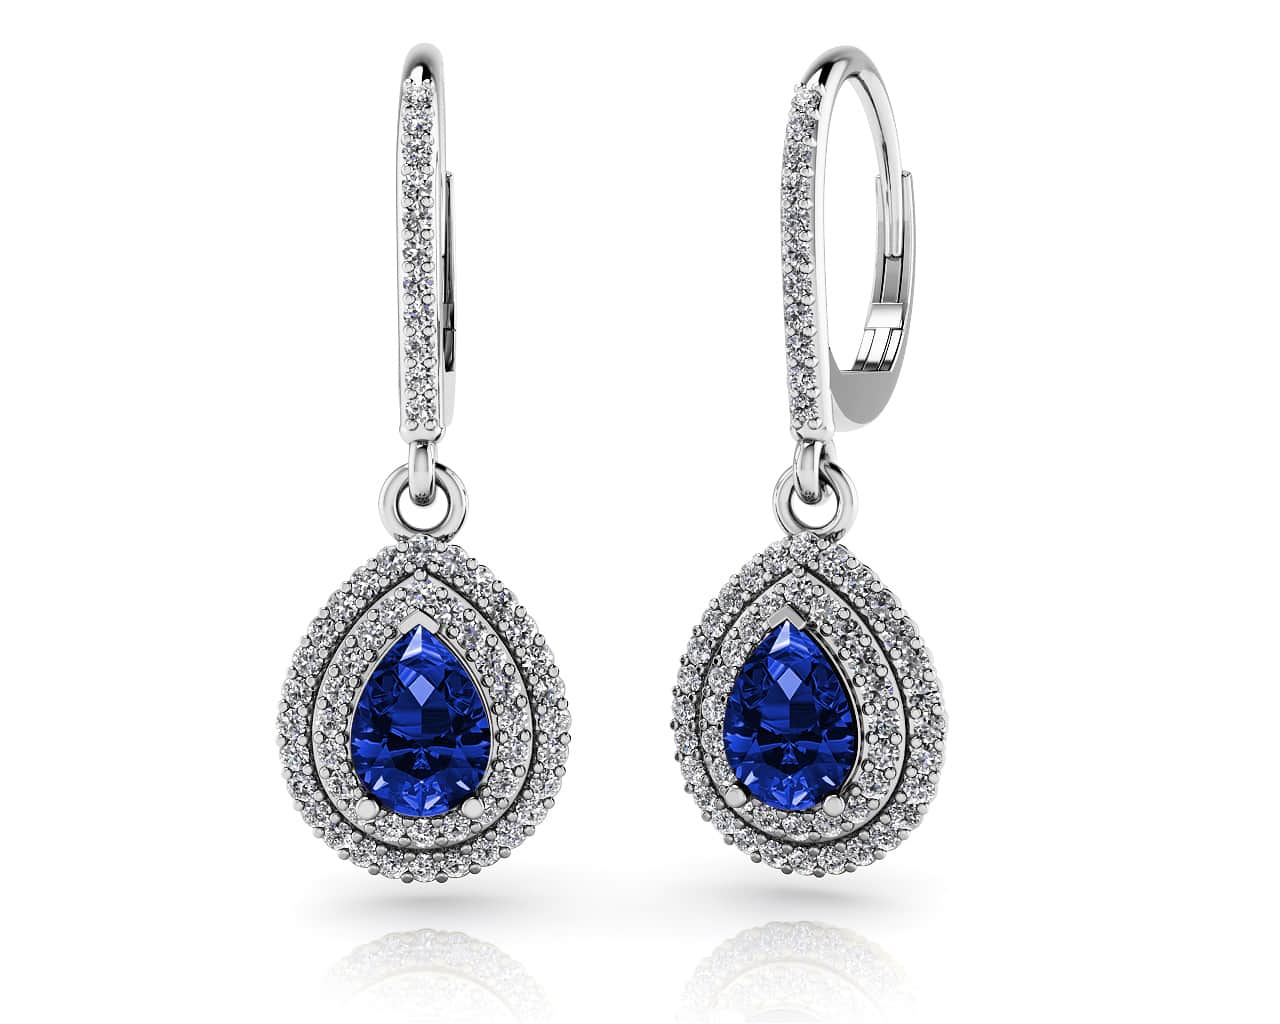 Vintage Teardrop Diamond And Gemstone Earrings